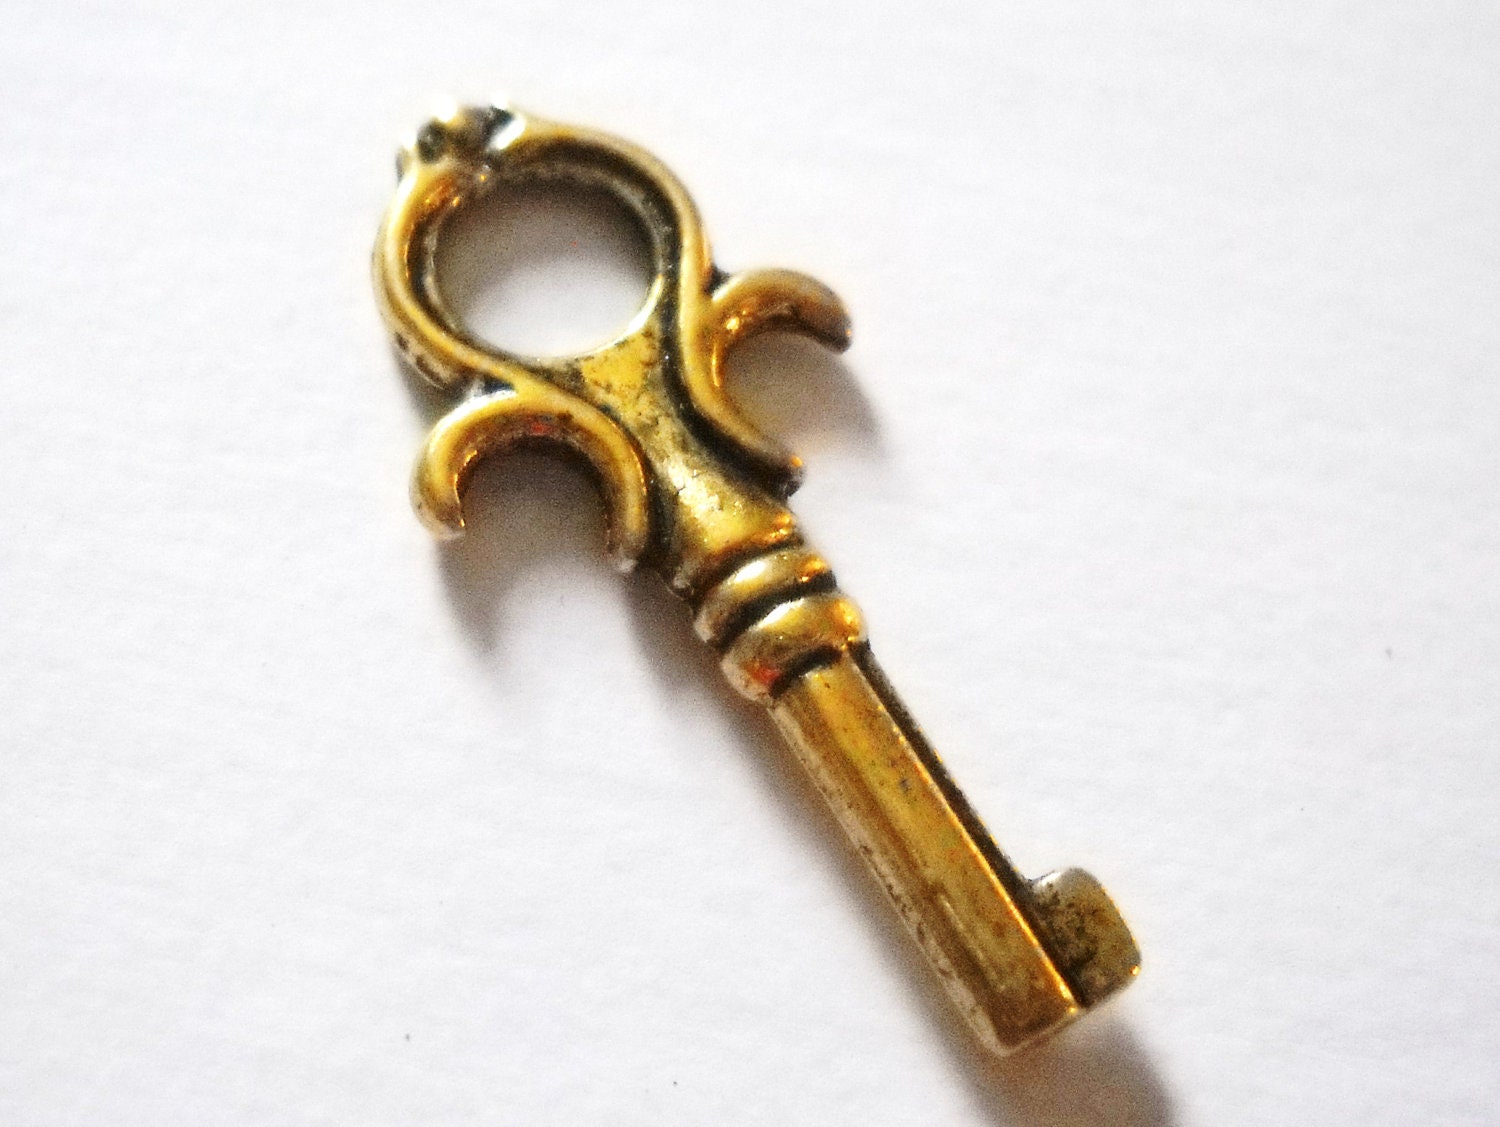 Key Charms Bulk Keys Skeleton Keys Antiqued Gold Keys Tiny Key Charms Miniature Keys Bulk Skeleton Keys Heart Keys 50 Pieces